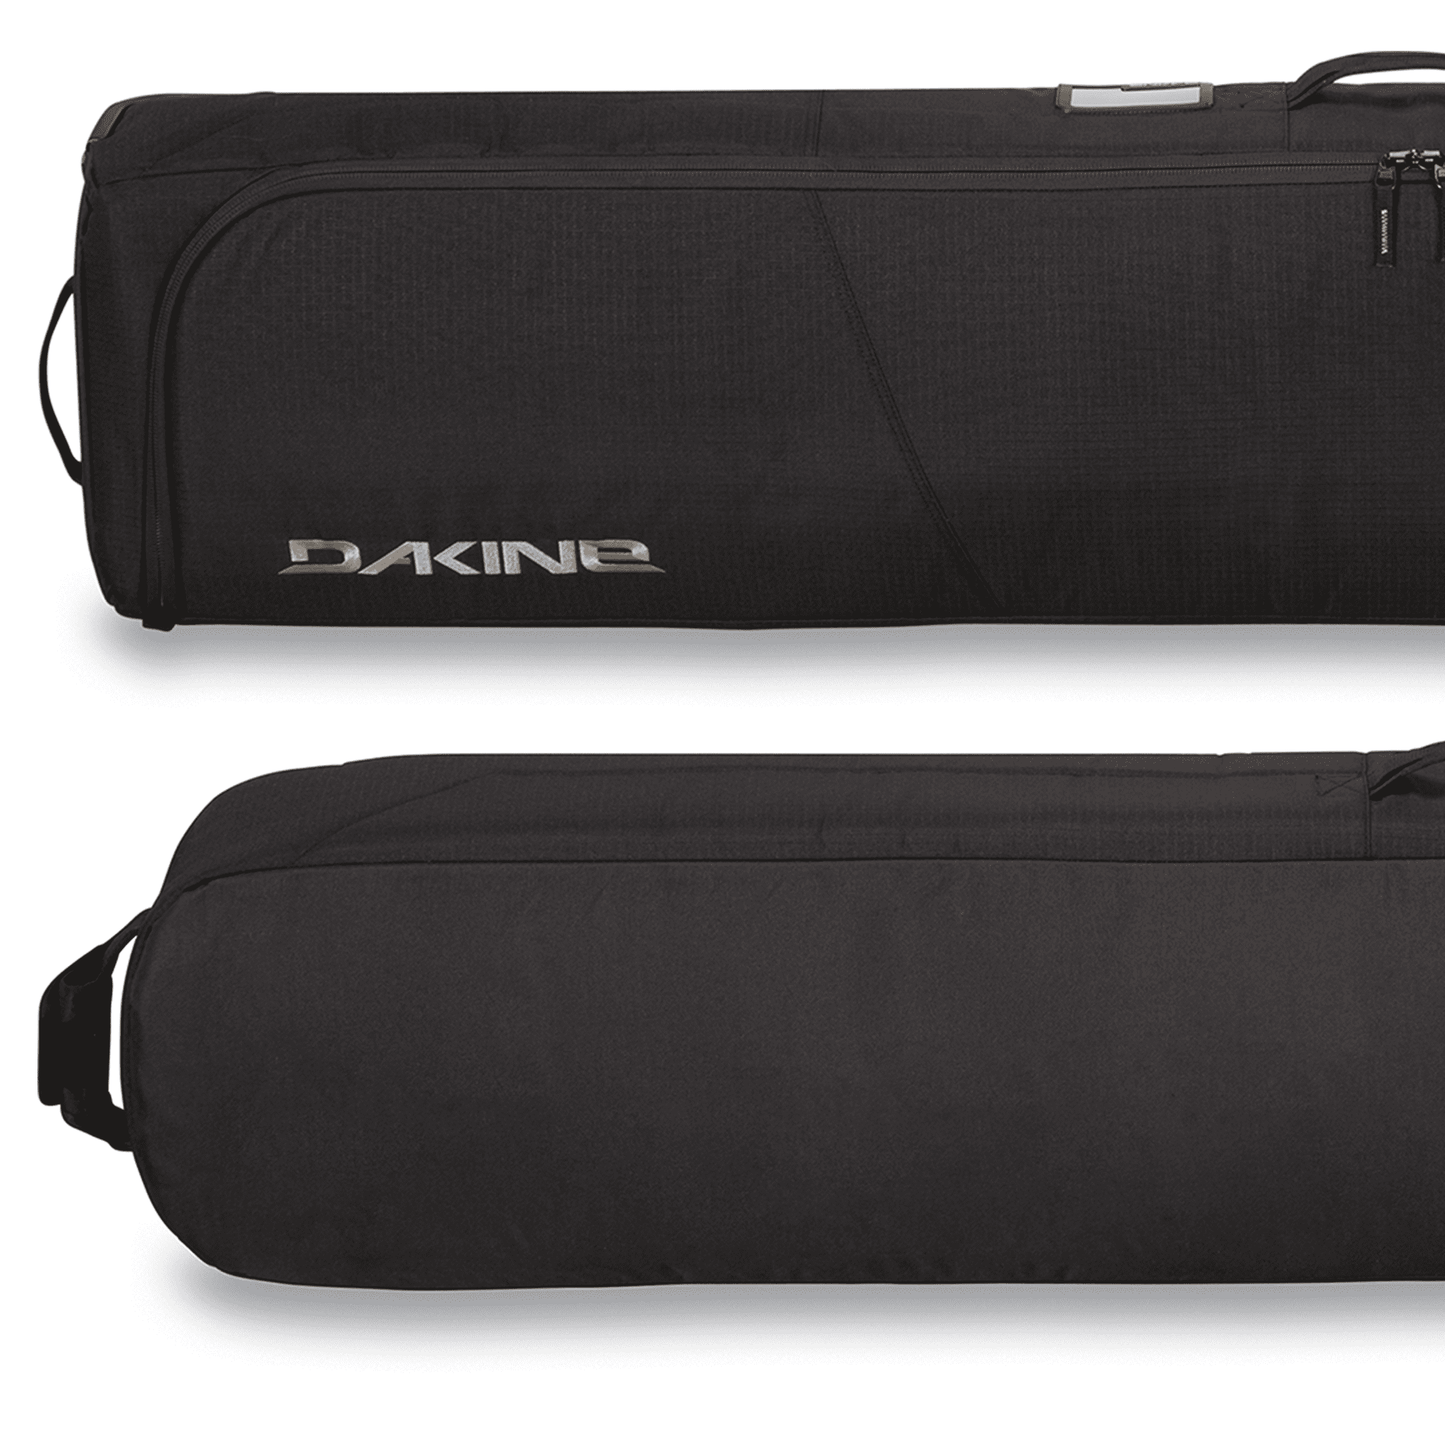 Dakine Low Roller Snowboard Bag - Black